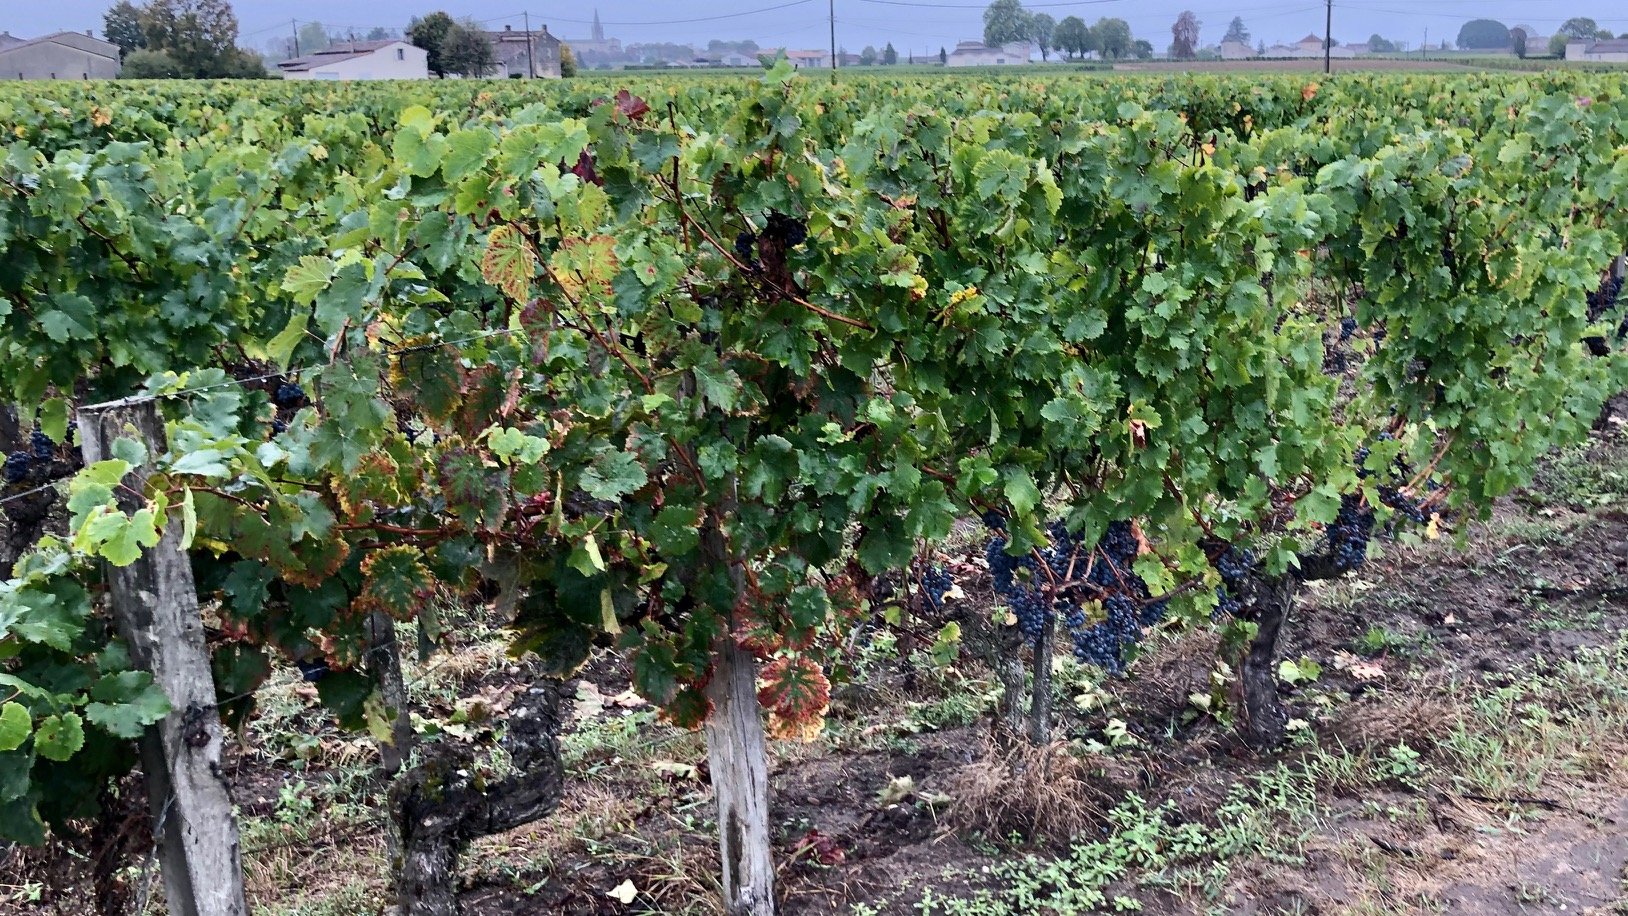 Grapes in the vineyard at Chateau Cote de Baleau